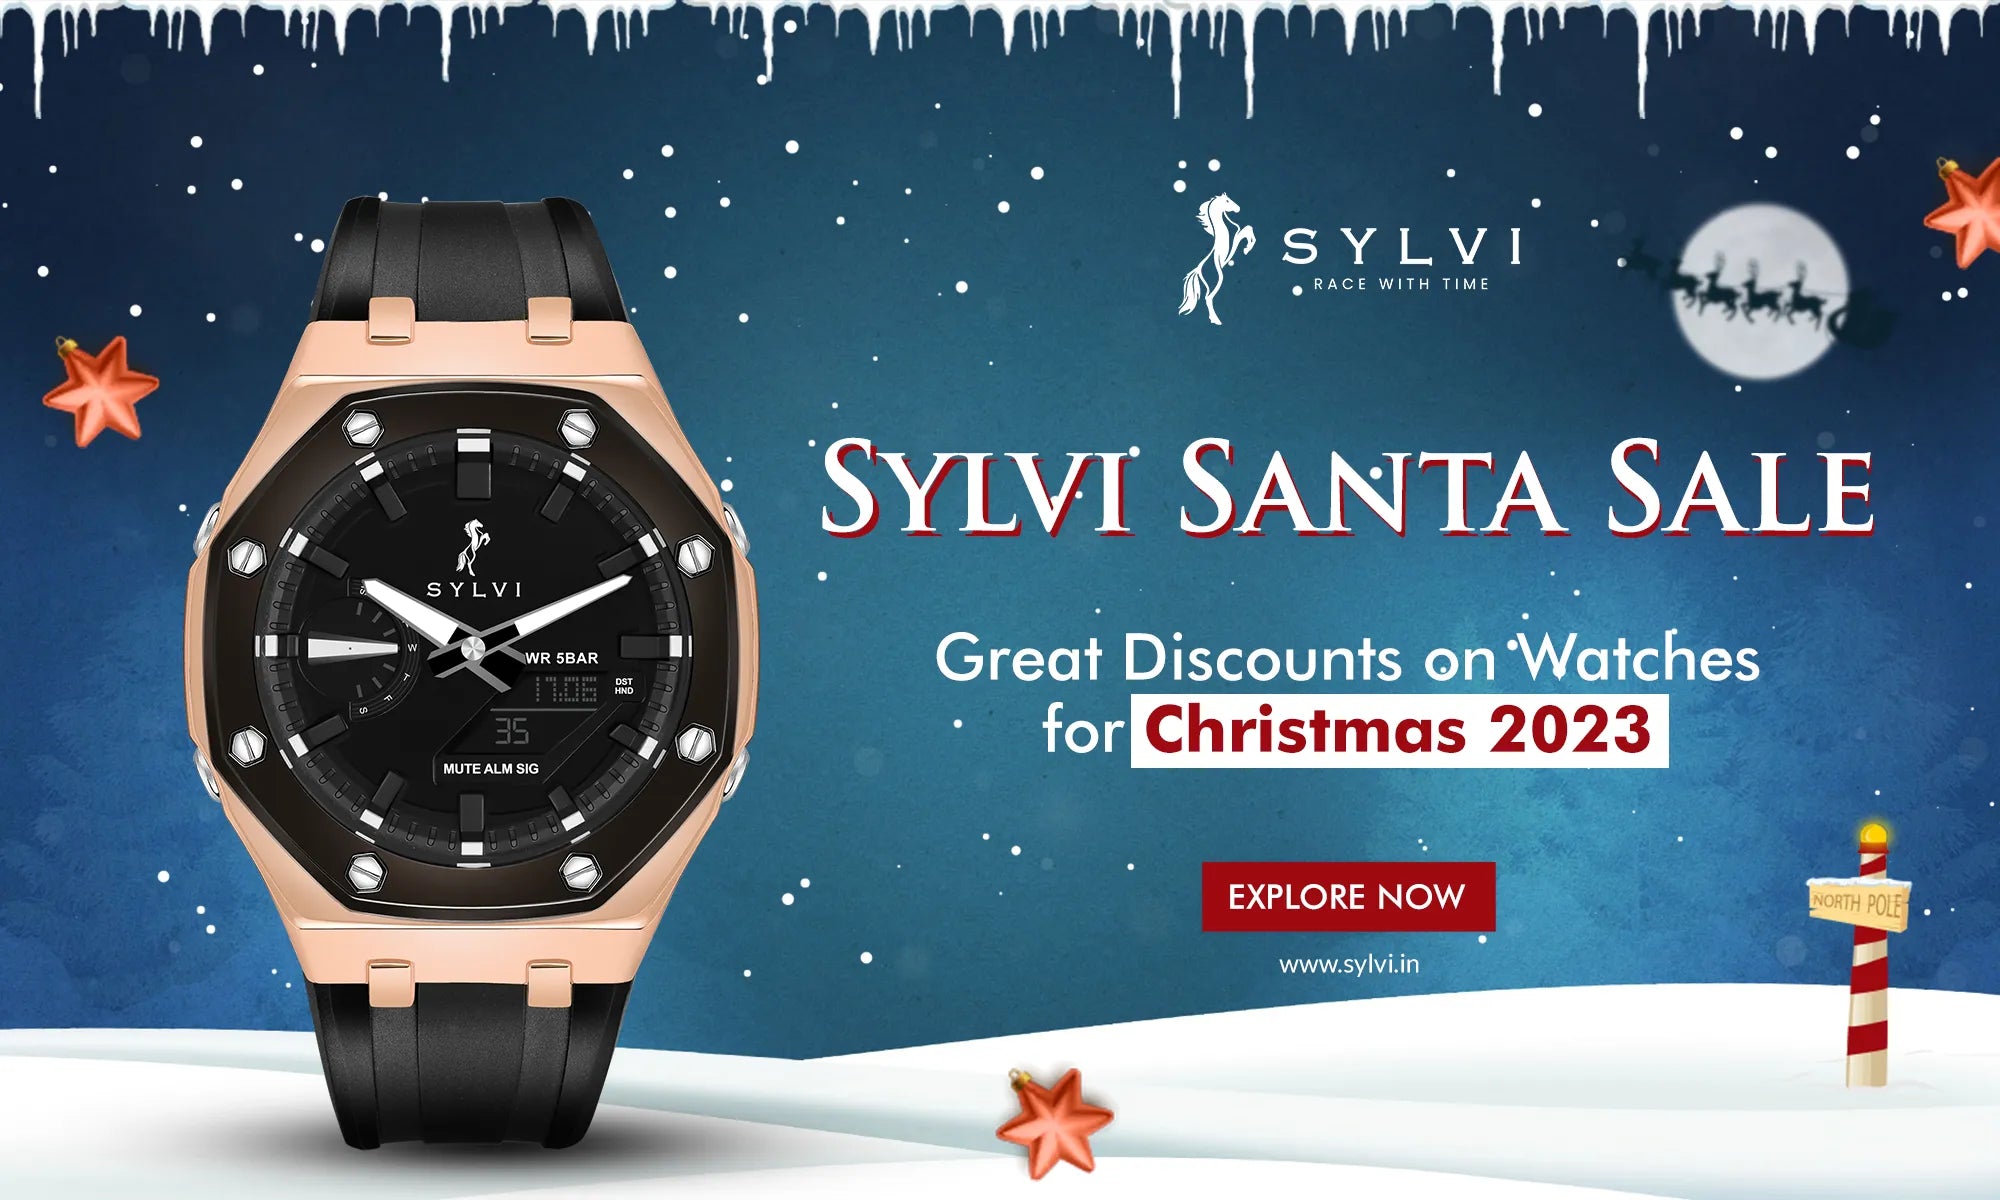 Sylvi Santa Sale 2023: Great Christmas Deals on Watches for Men